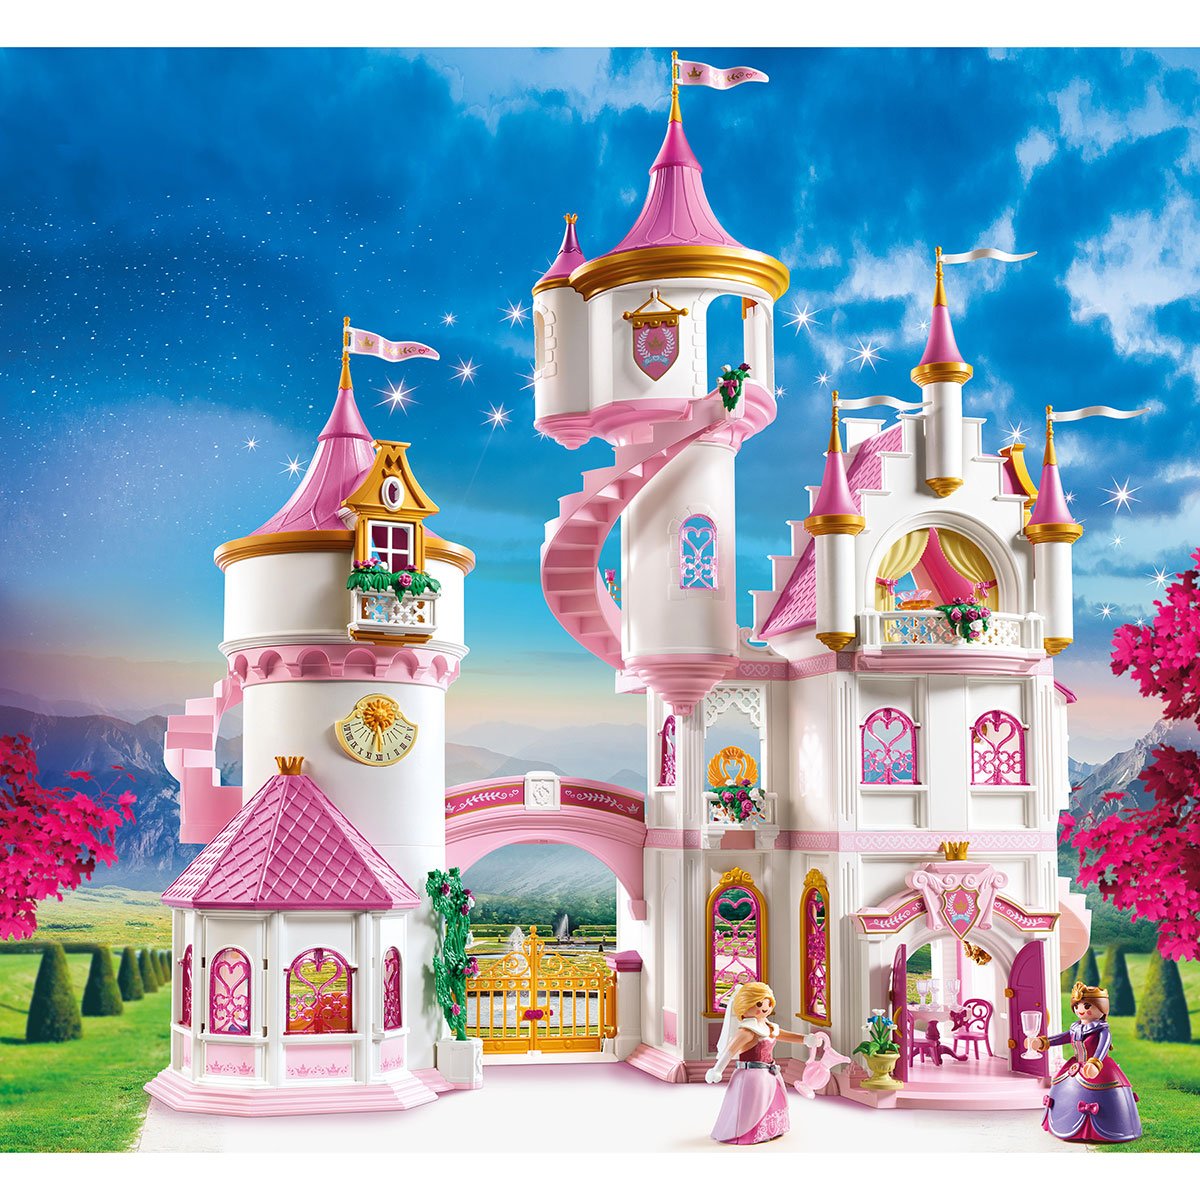 Grand palais de princesse Playmobil Princess 70447